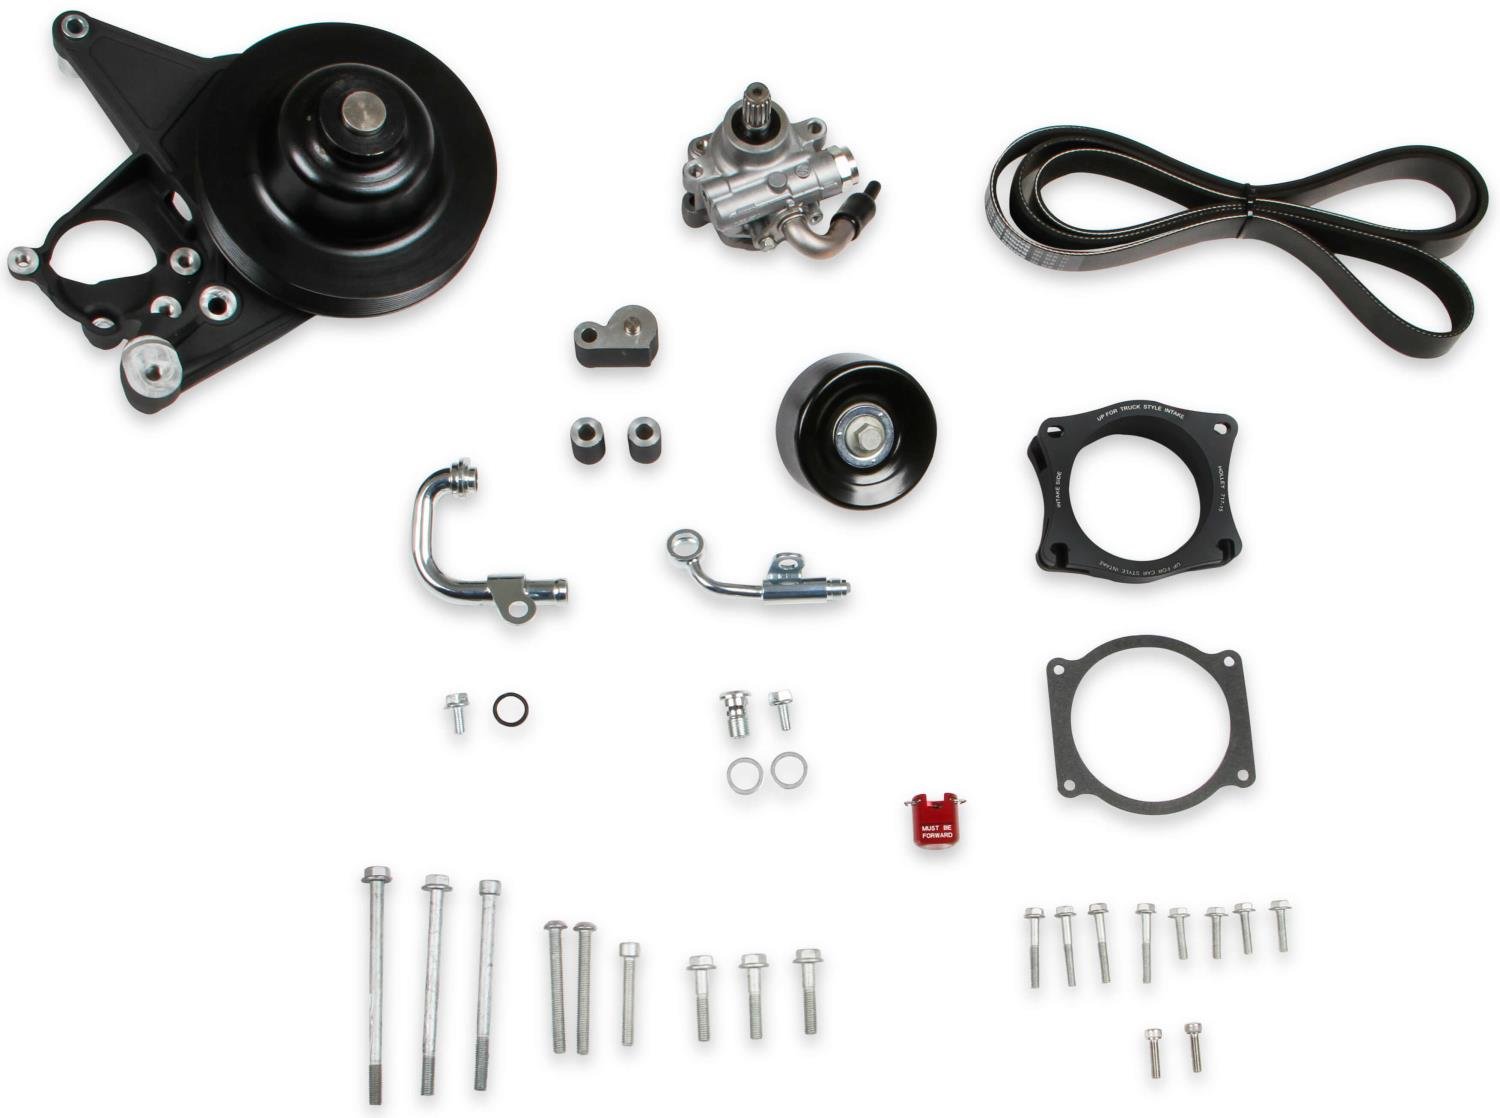 Retro-Fit Hydraulic Power Steering Kit for GM Gen